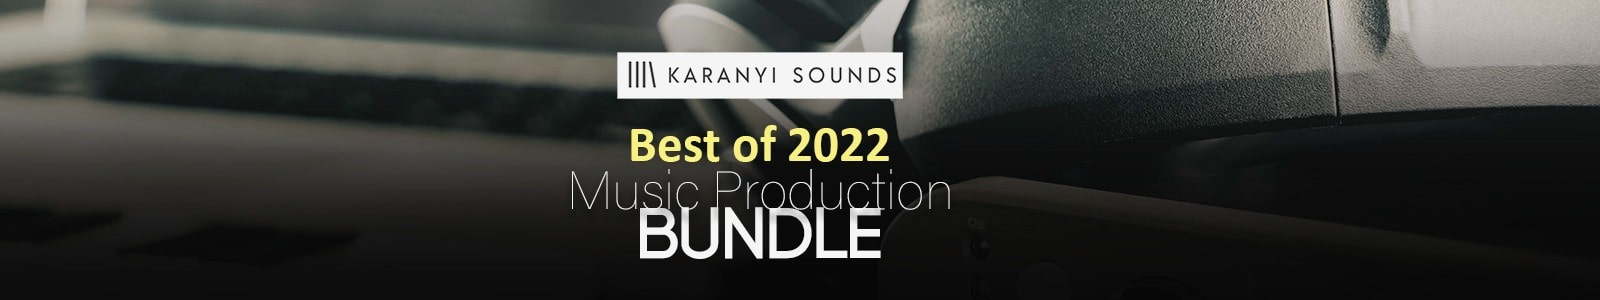 Karanyi Sounds Best of 2022 Music Production Bundle